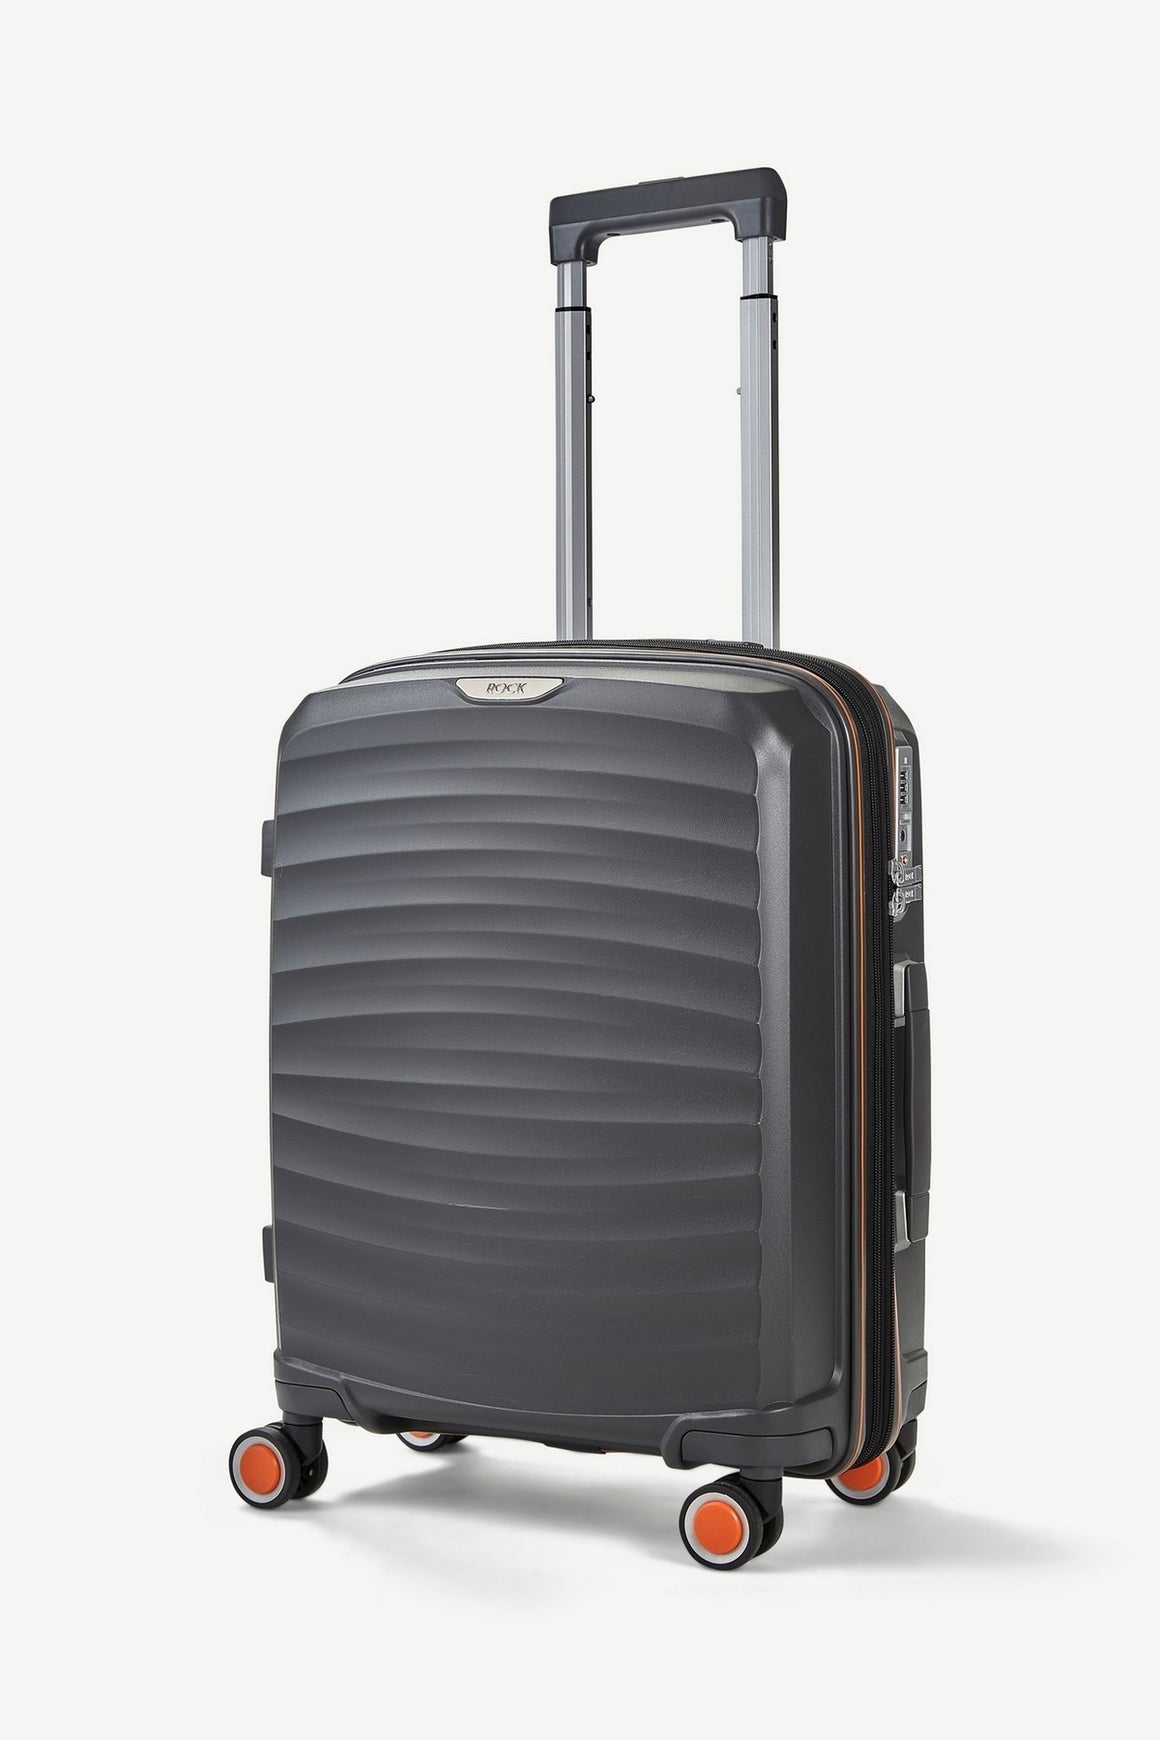 Sunwave Small Suitcase